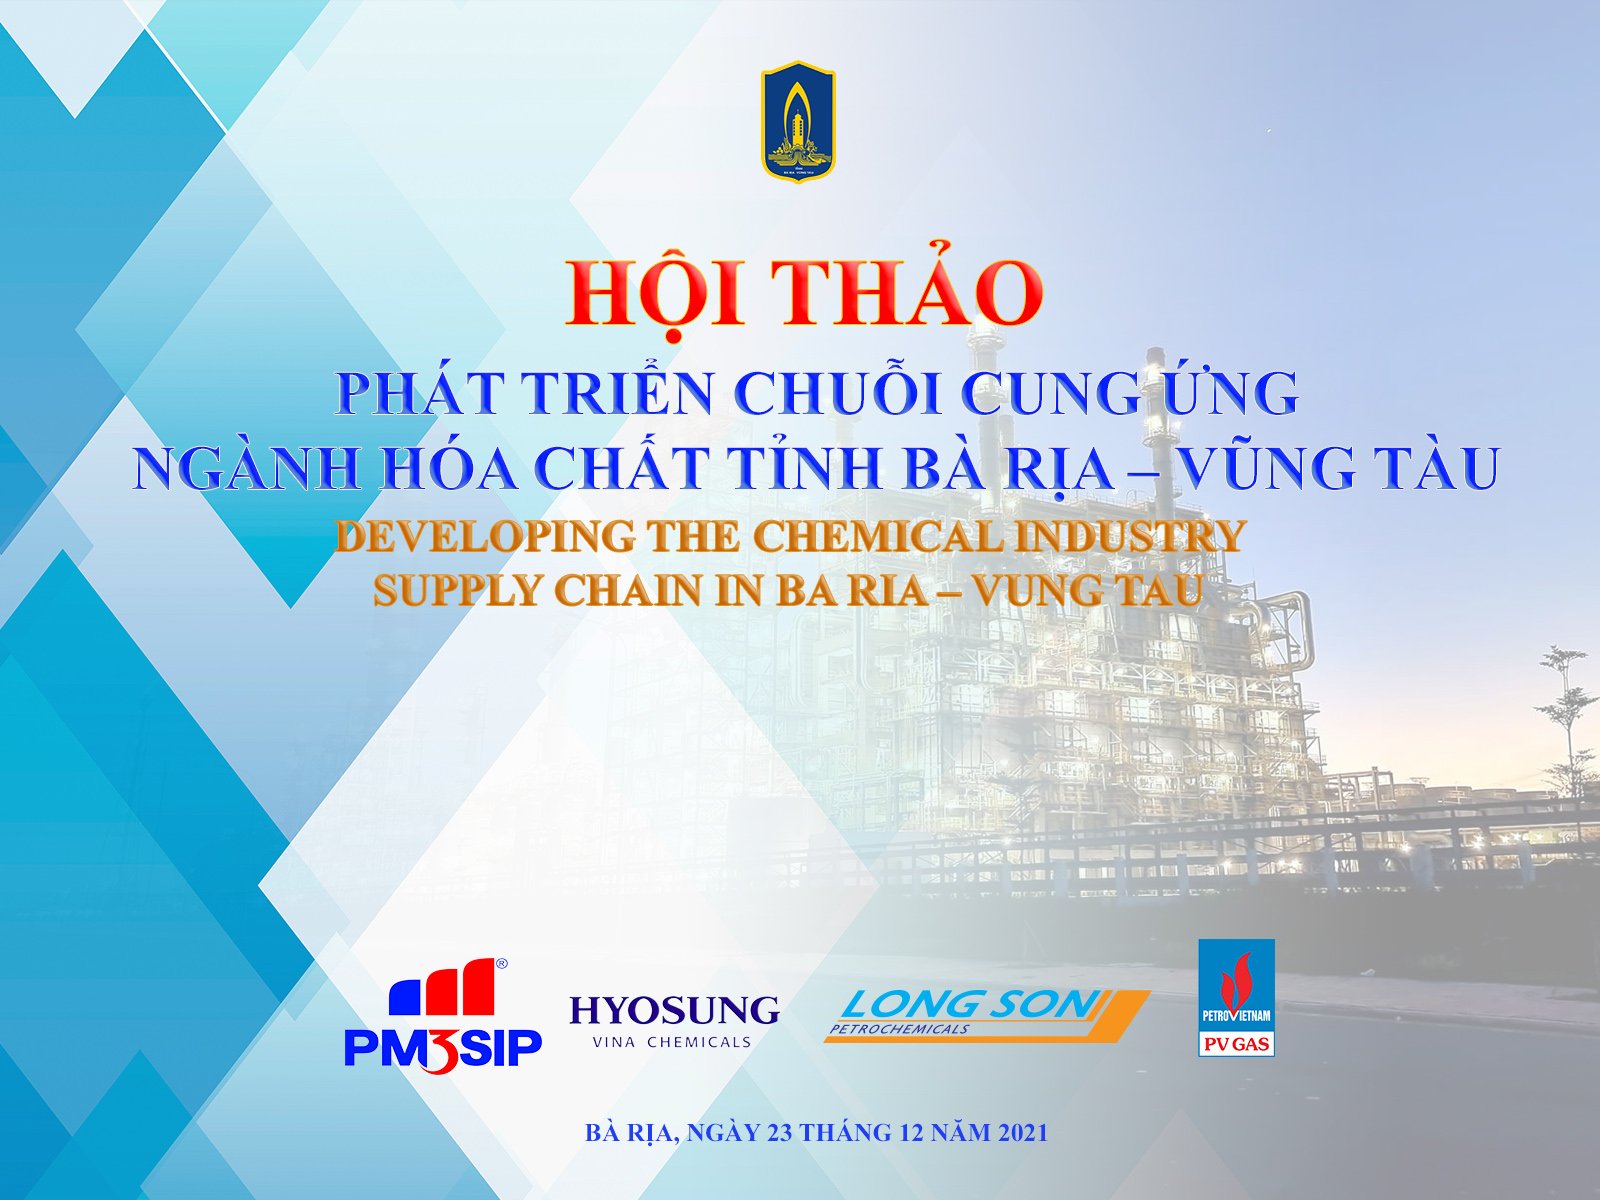 WEBINAR “Developing the Chemical Industry Supply Chain in Ba Ria – Vung Tau”